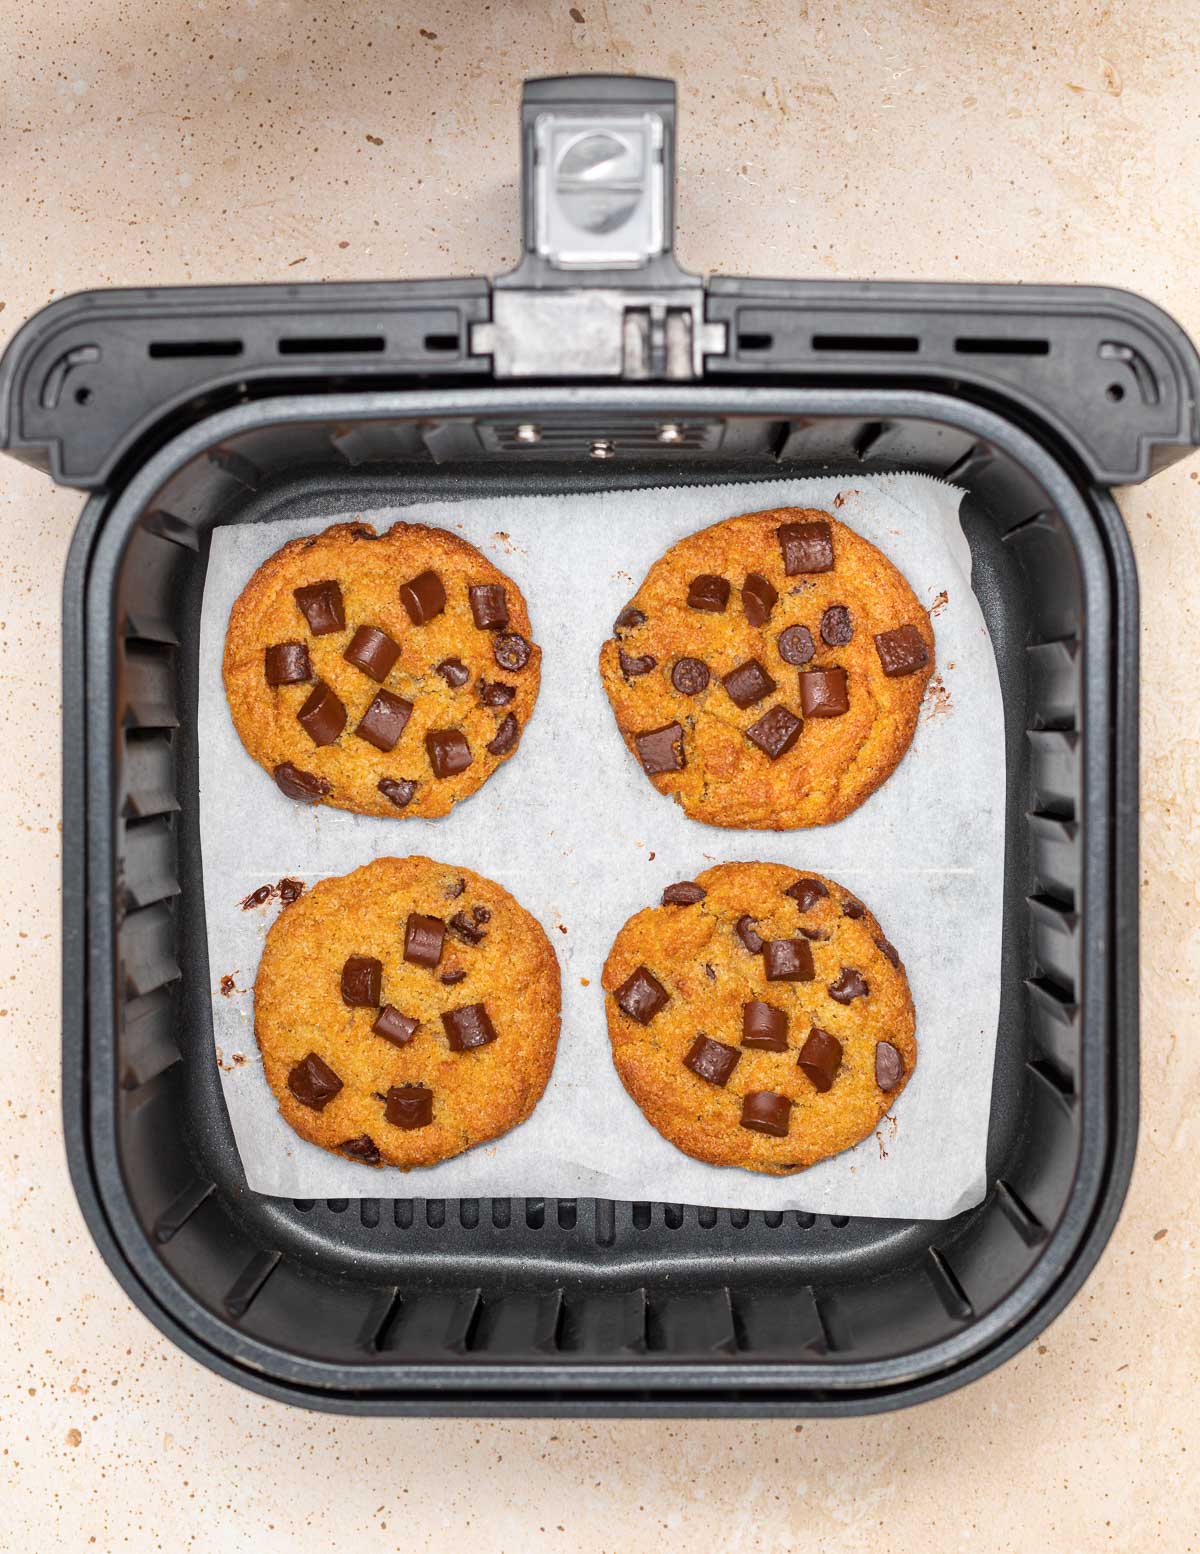 4 cooked cookies in an air fryer basket